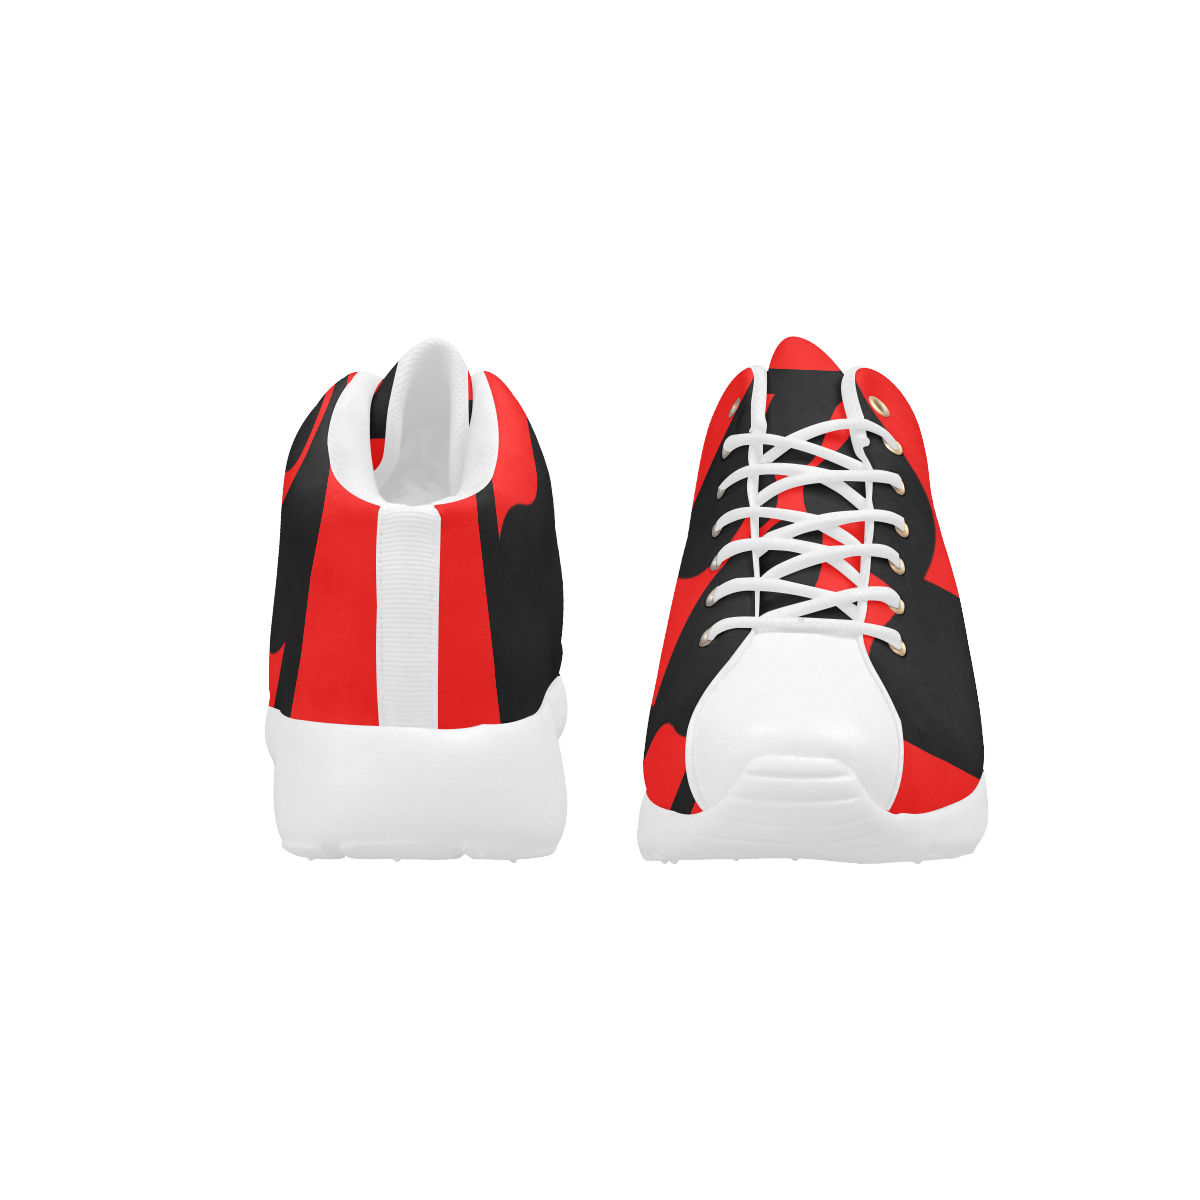 black ivolve in red Men's Basketball Training Shoes (Model 47502)